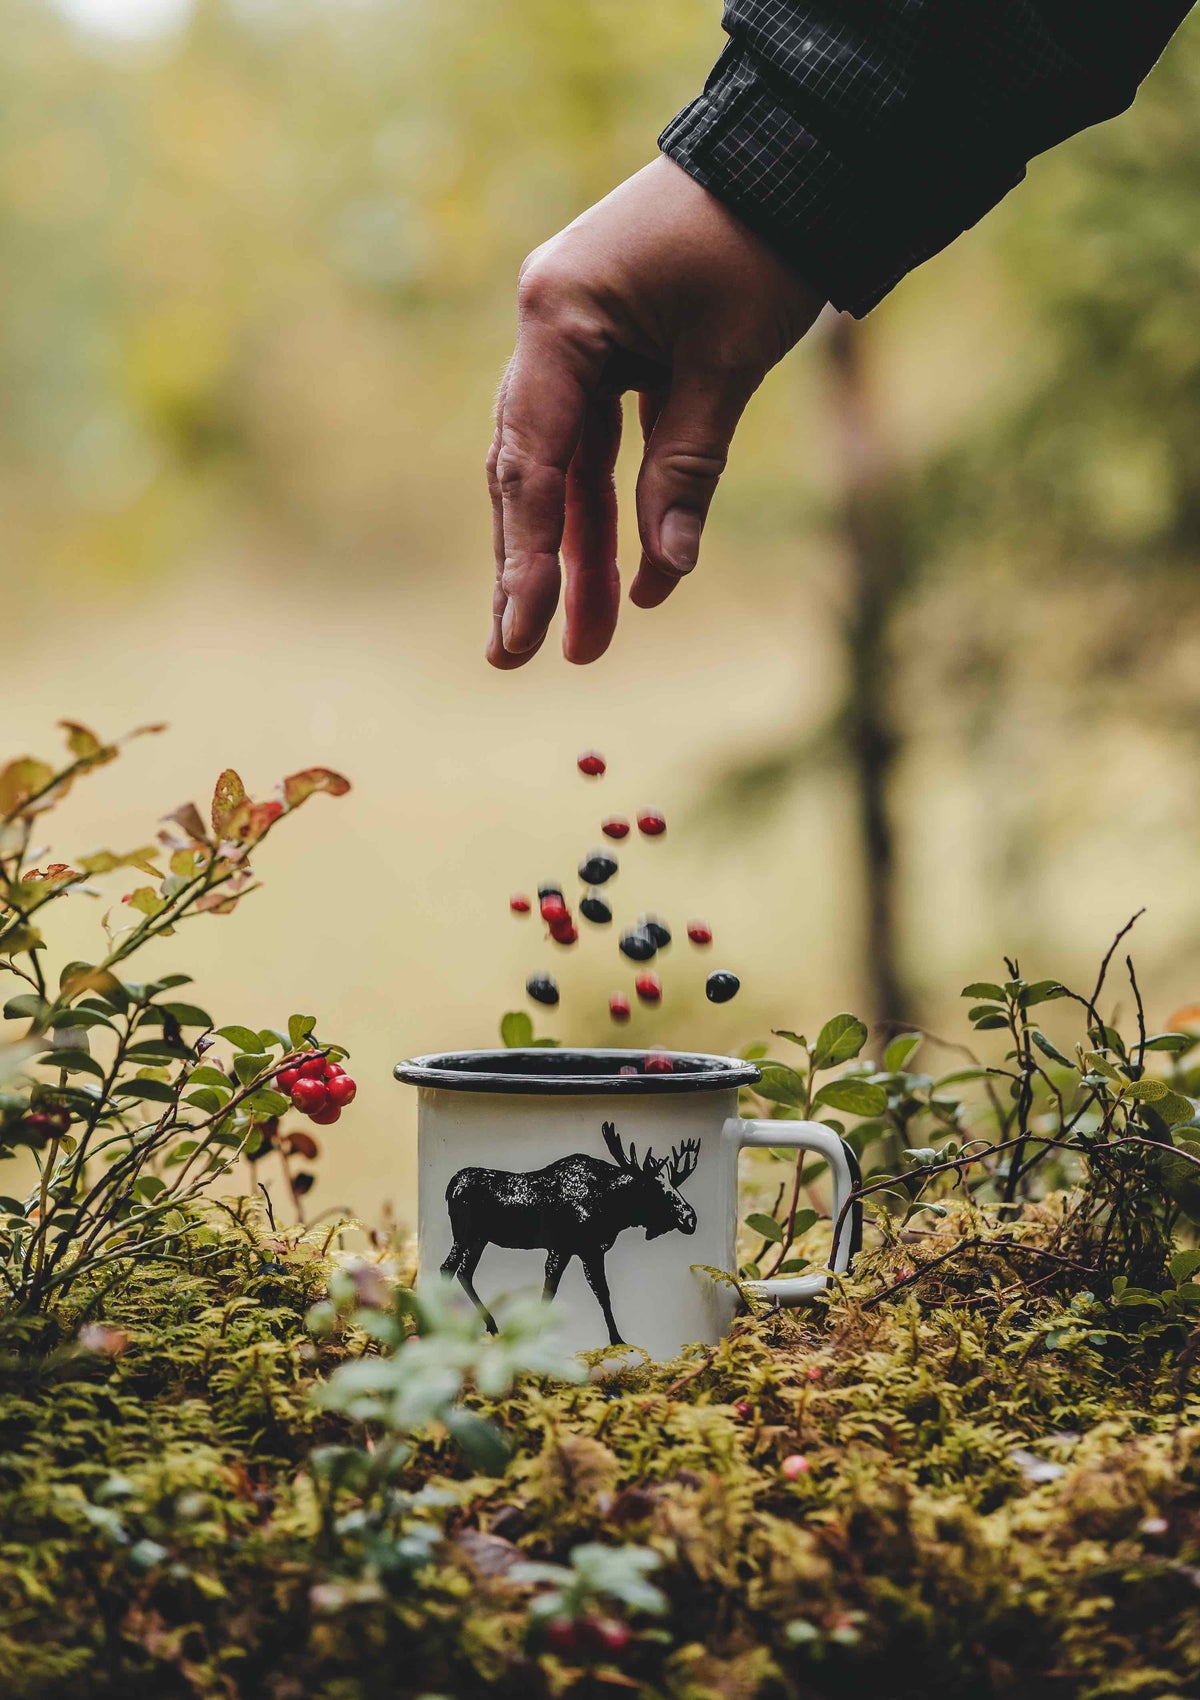 Dropping berries into a Muurla design mug